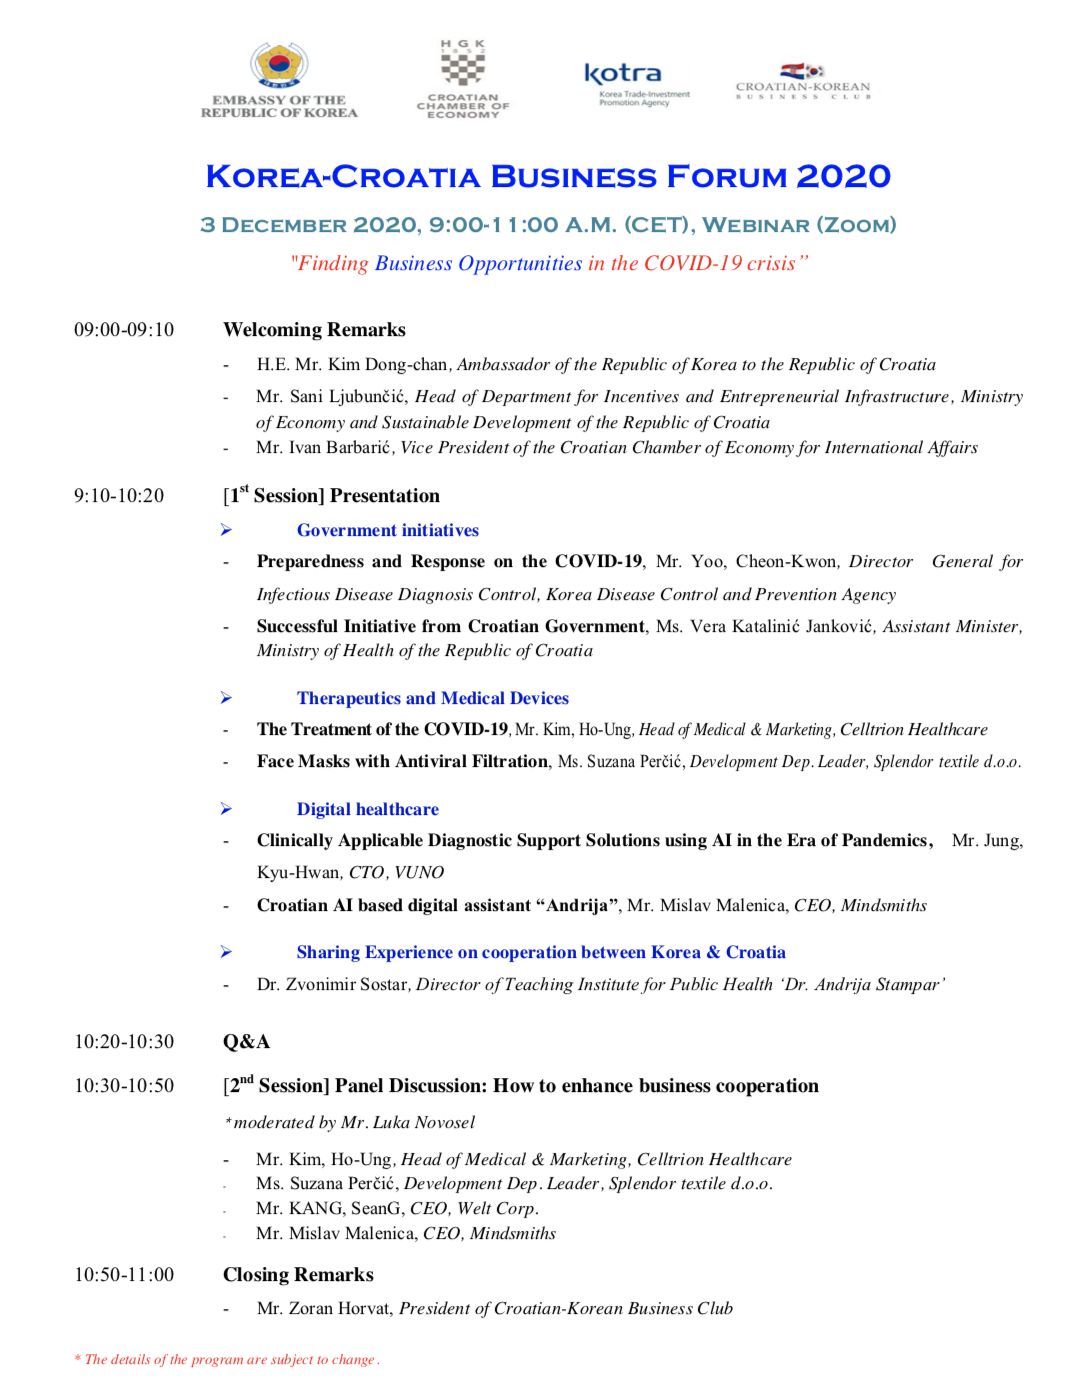  Korea-Croatia Business Forum 2020